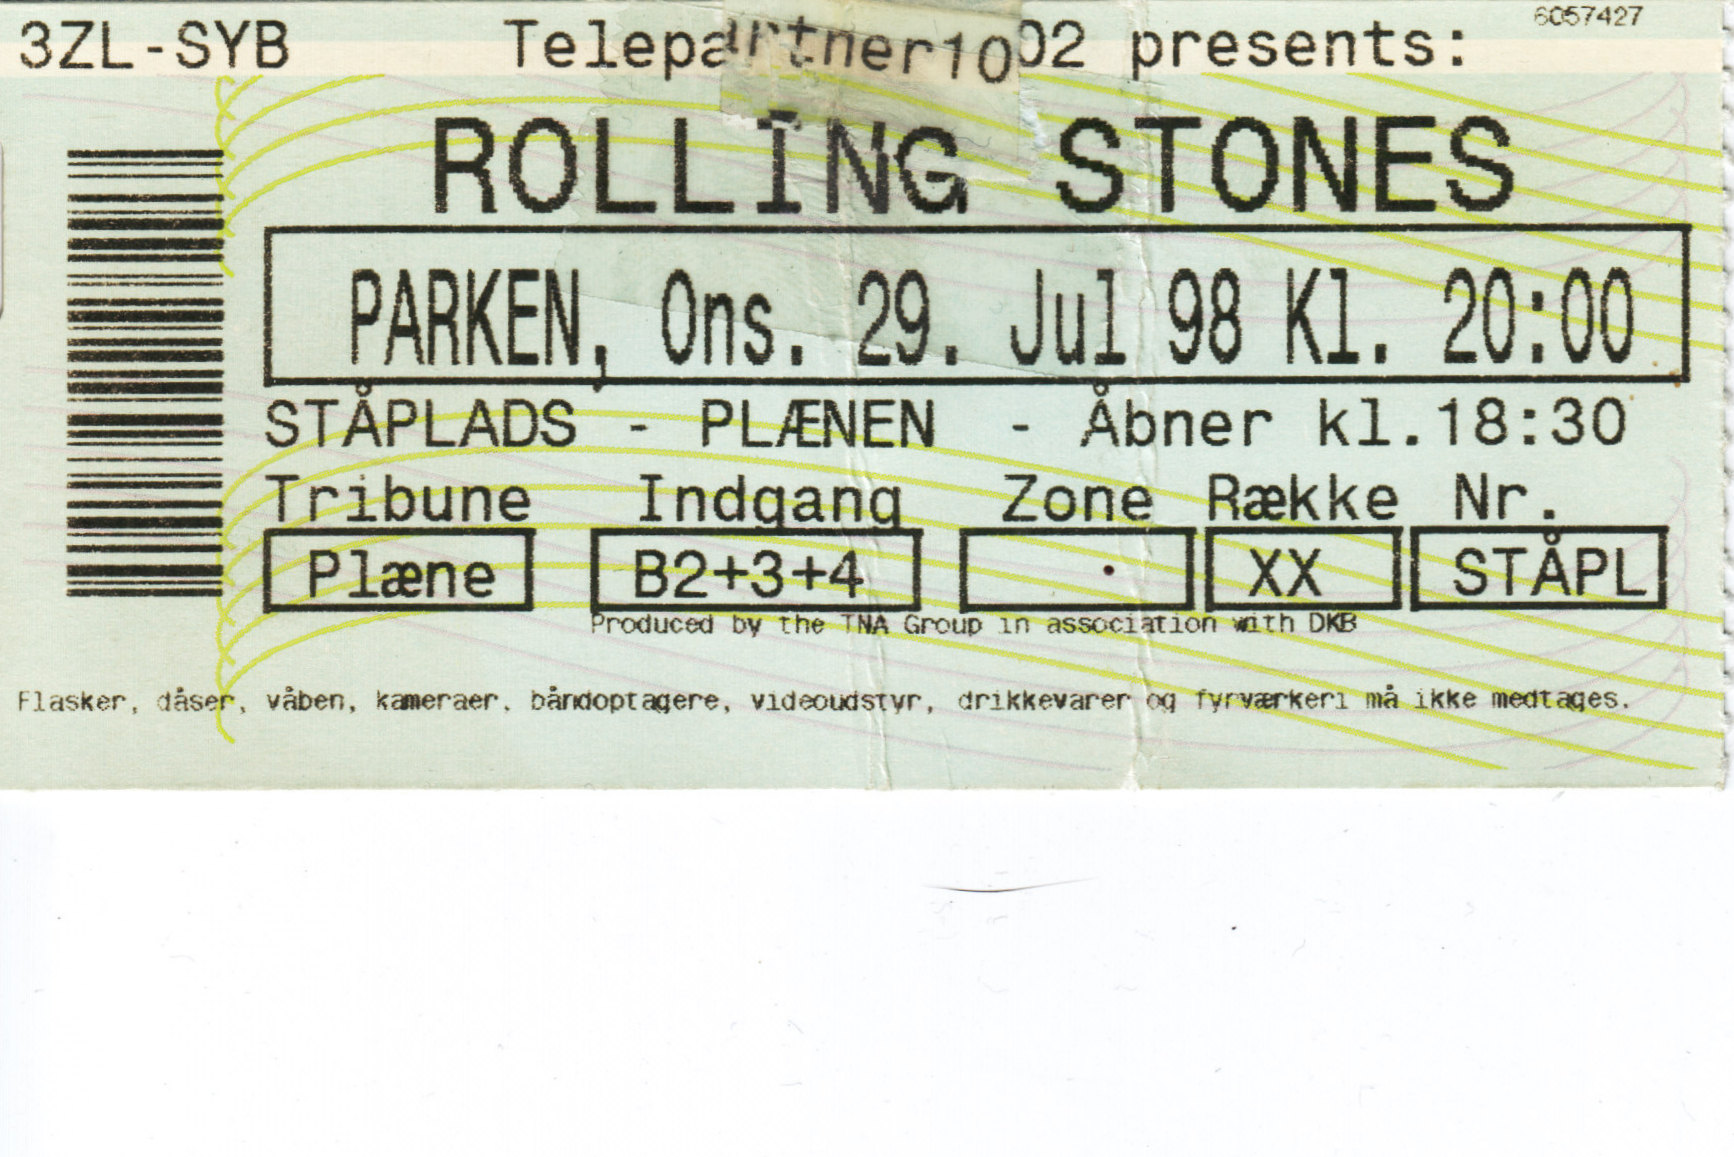 *29. juli 1998 Koncert Rolling Stones